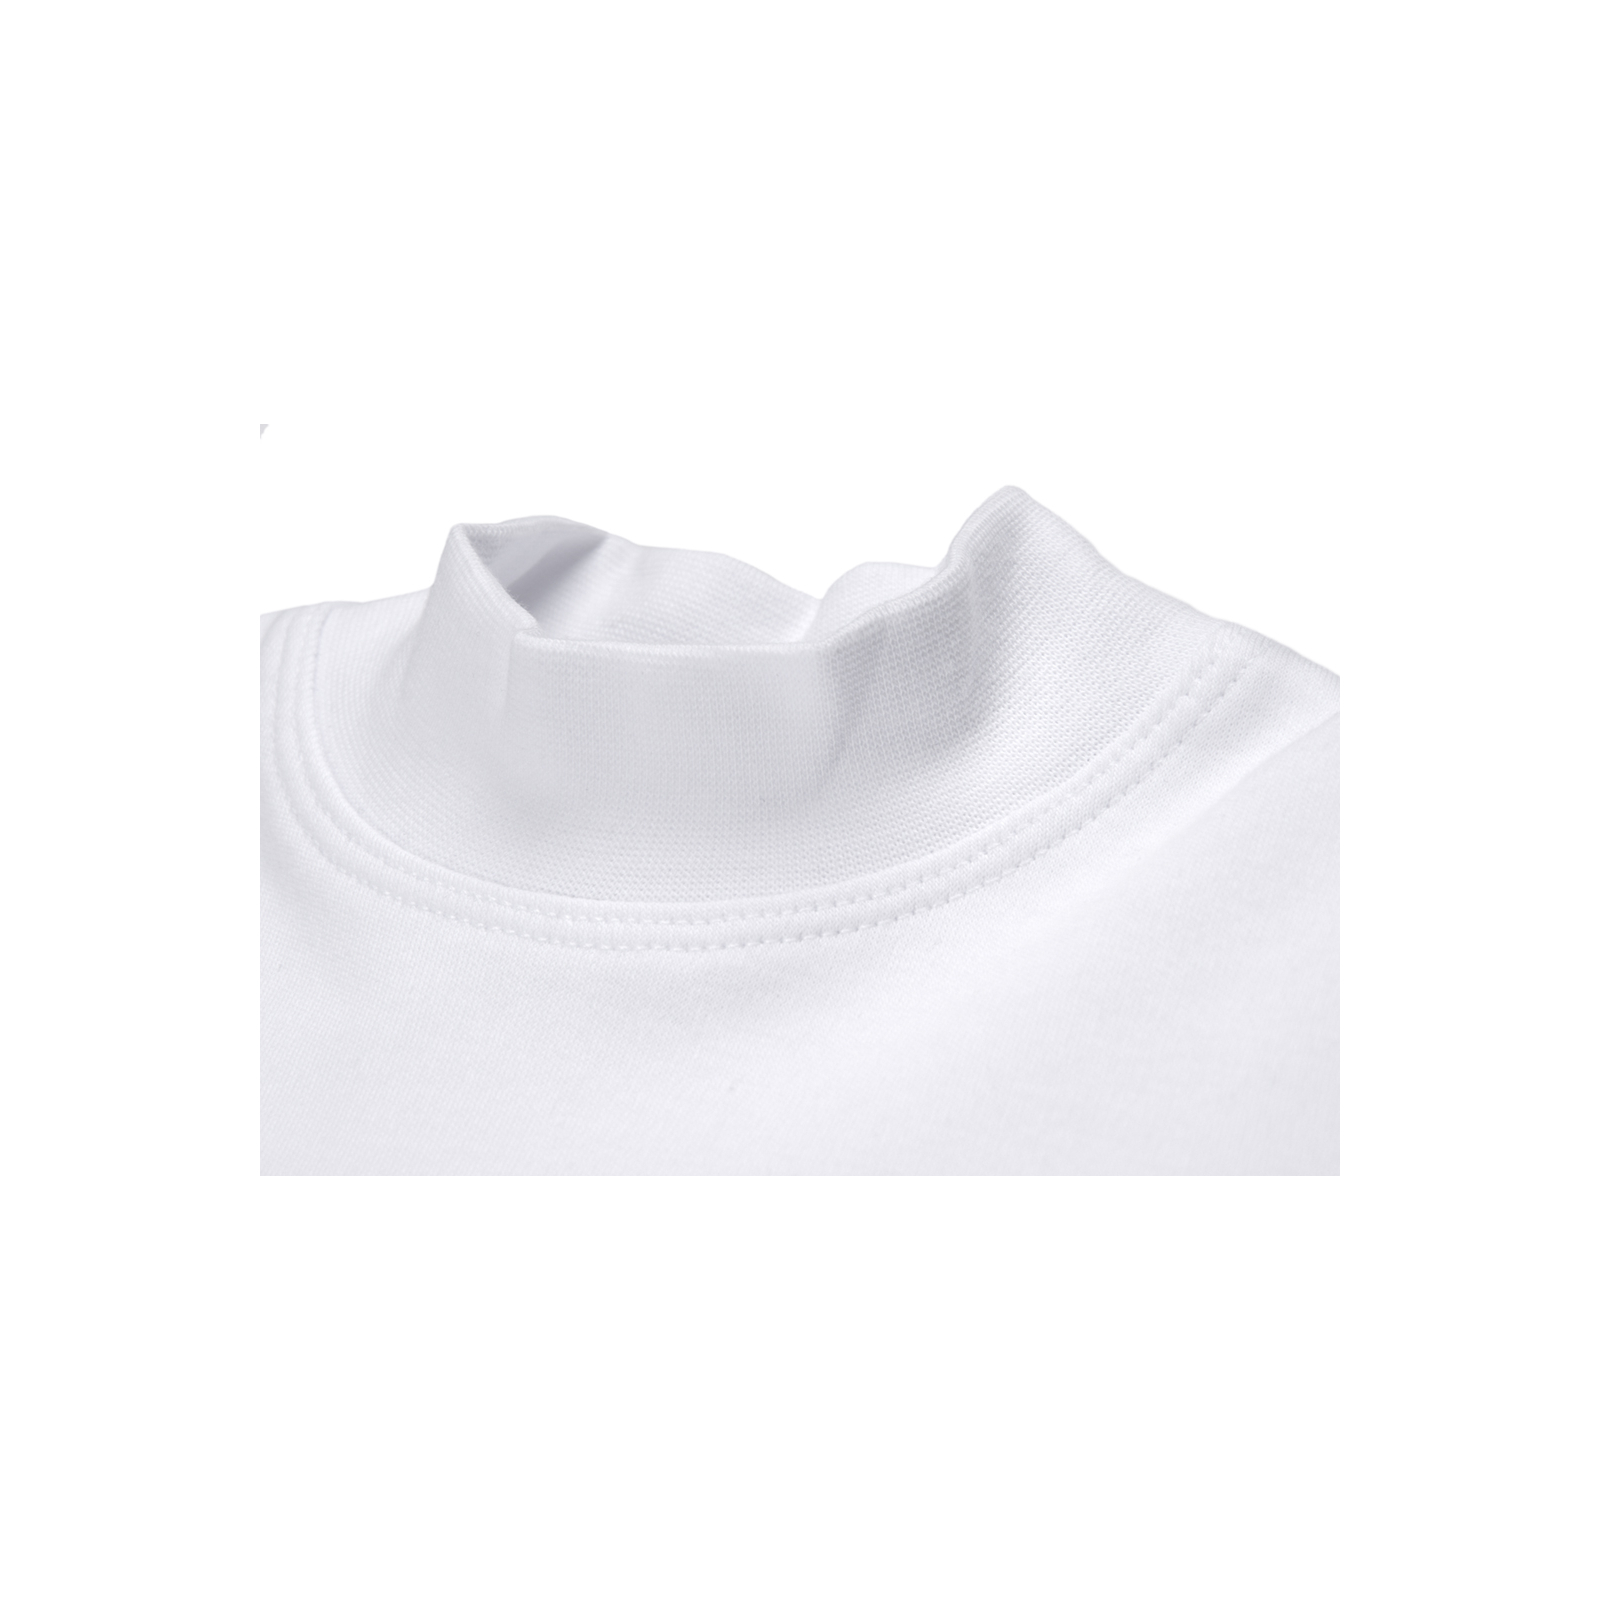 Кофта Lovetti водолазка белая (1011-86-white) изображение 3